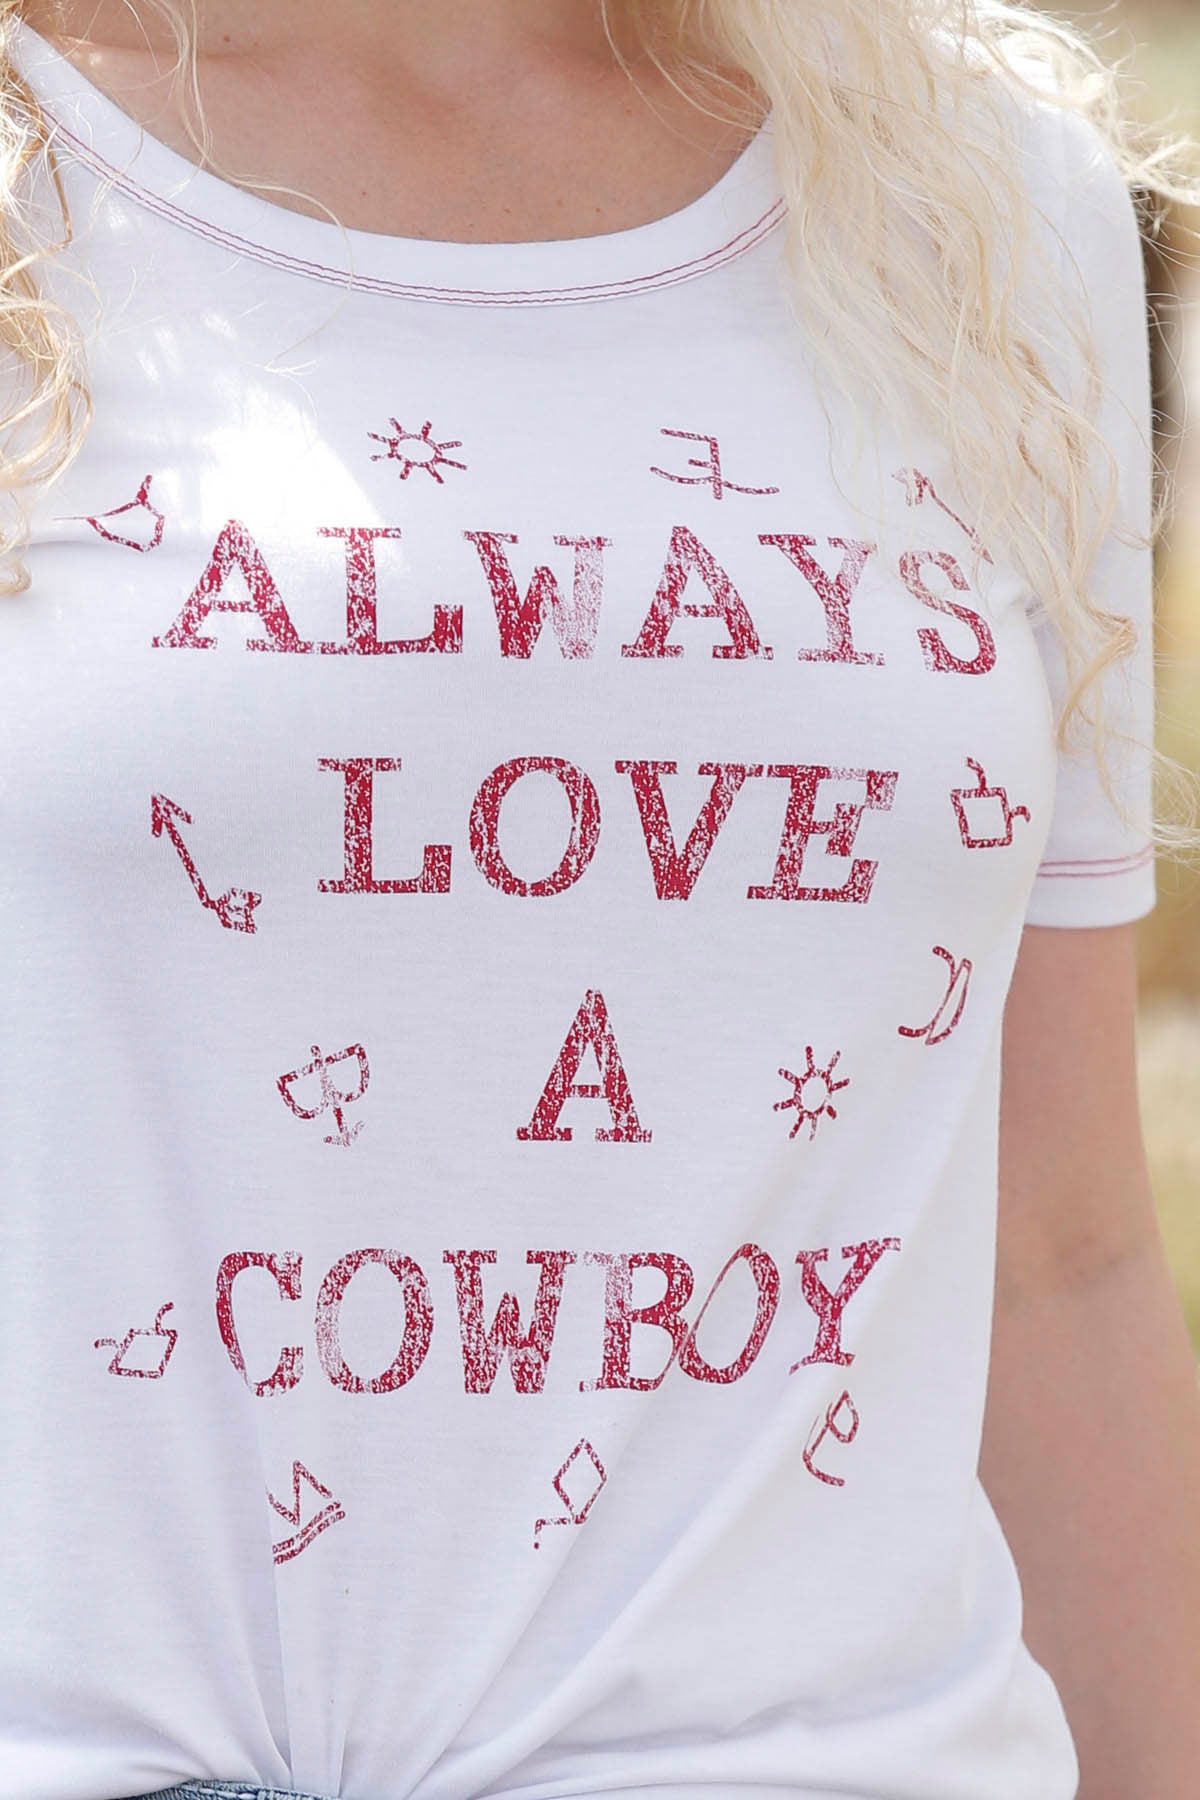 Cruel Girl "Always Love A Cowbot" tee